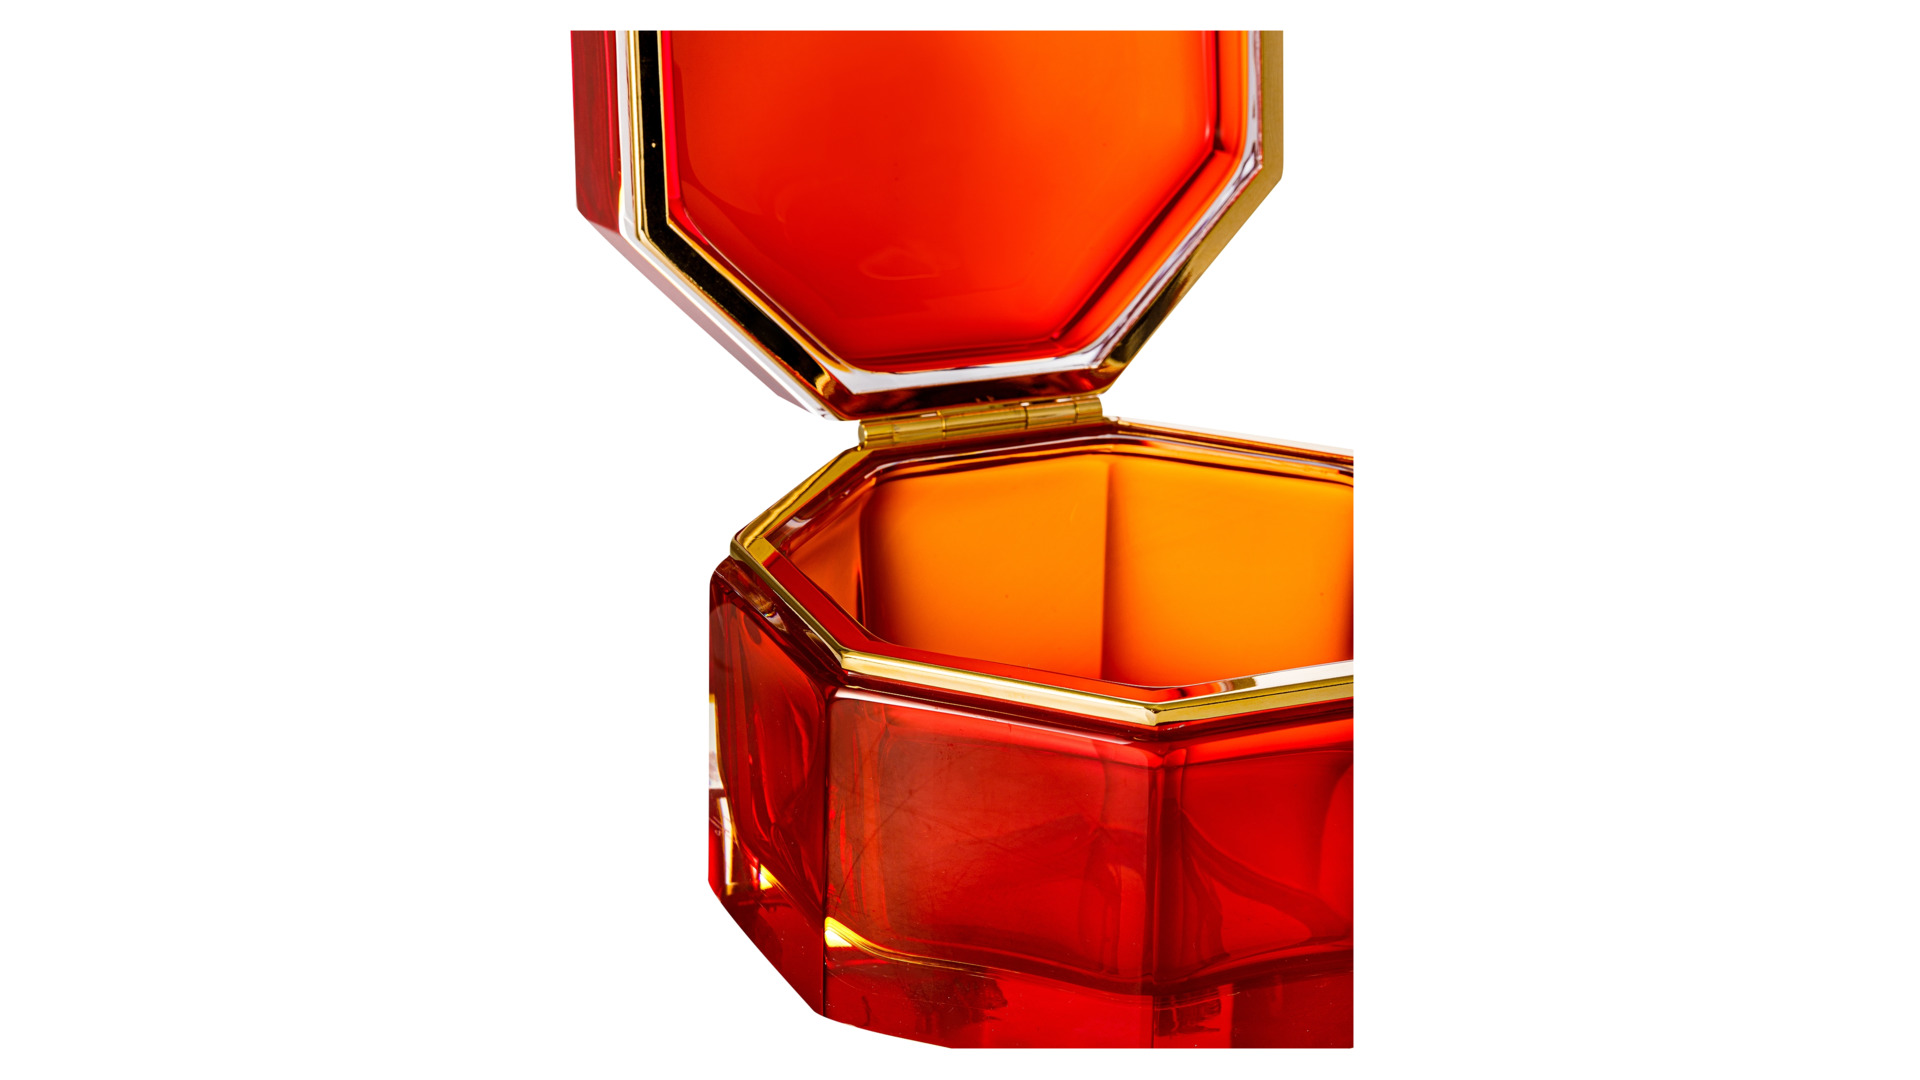 Шкатулка для украшений Alessandro Mandruzzato 18х12х11 см, стекло муранское, золото, красная